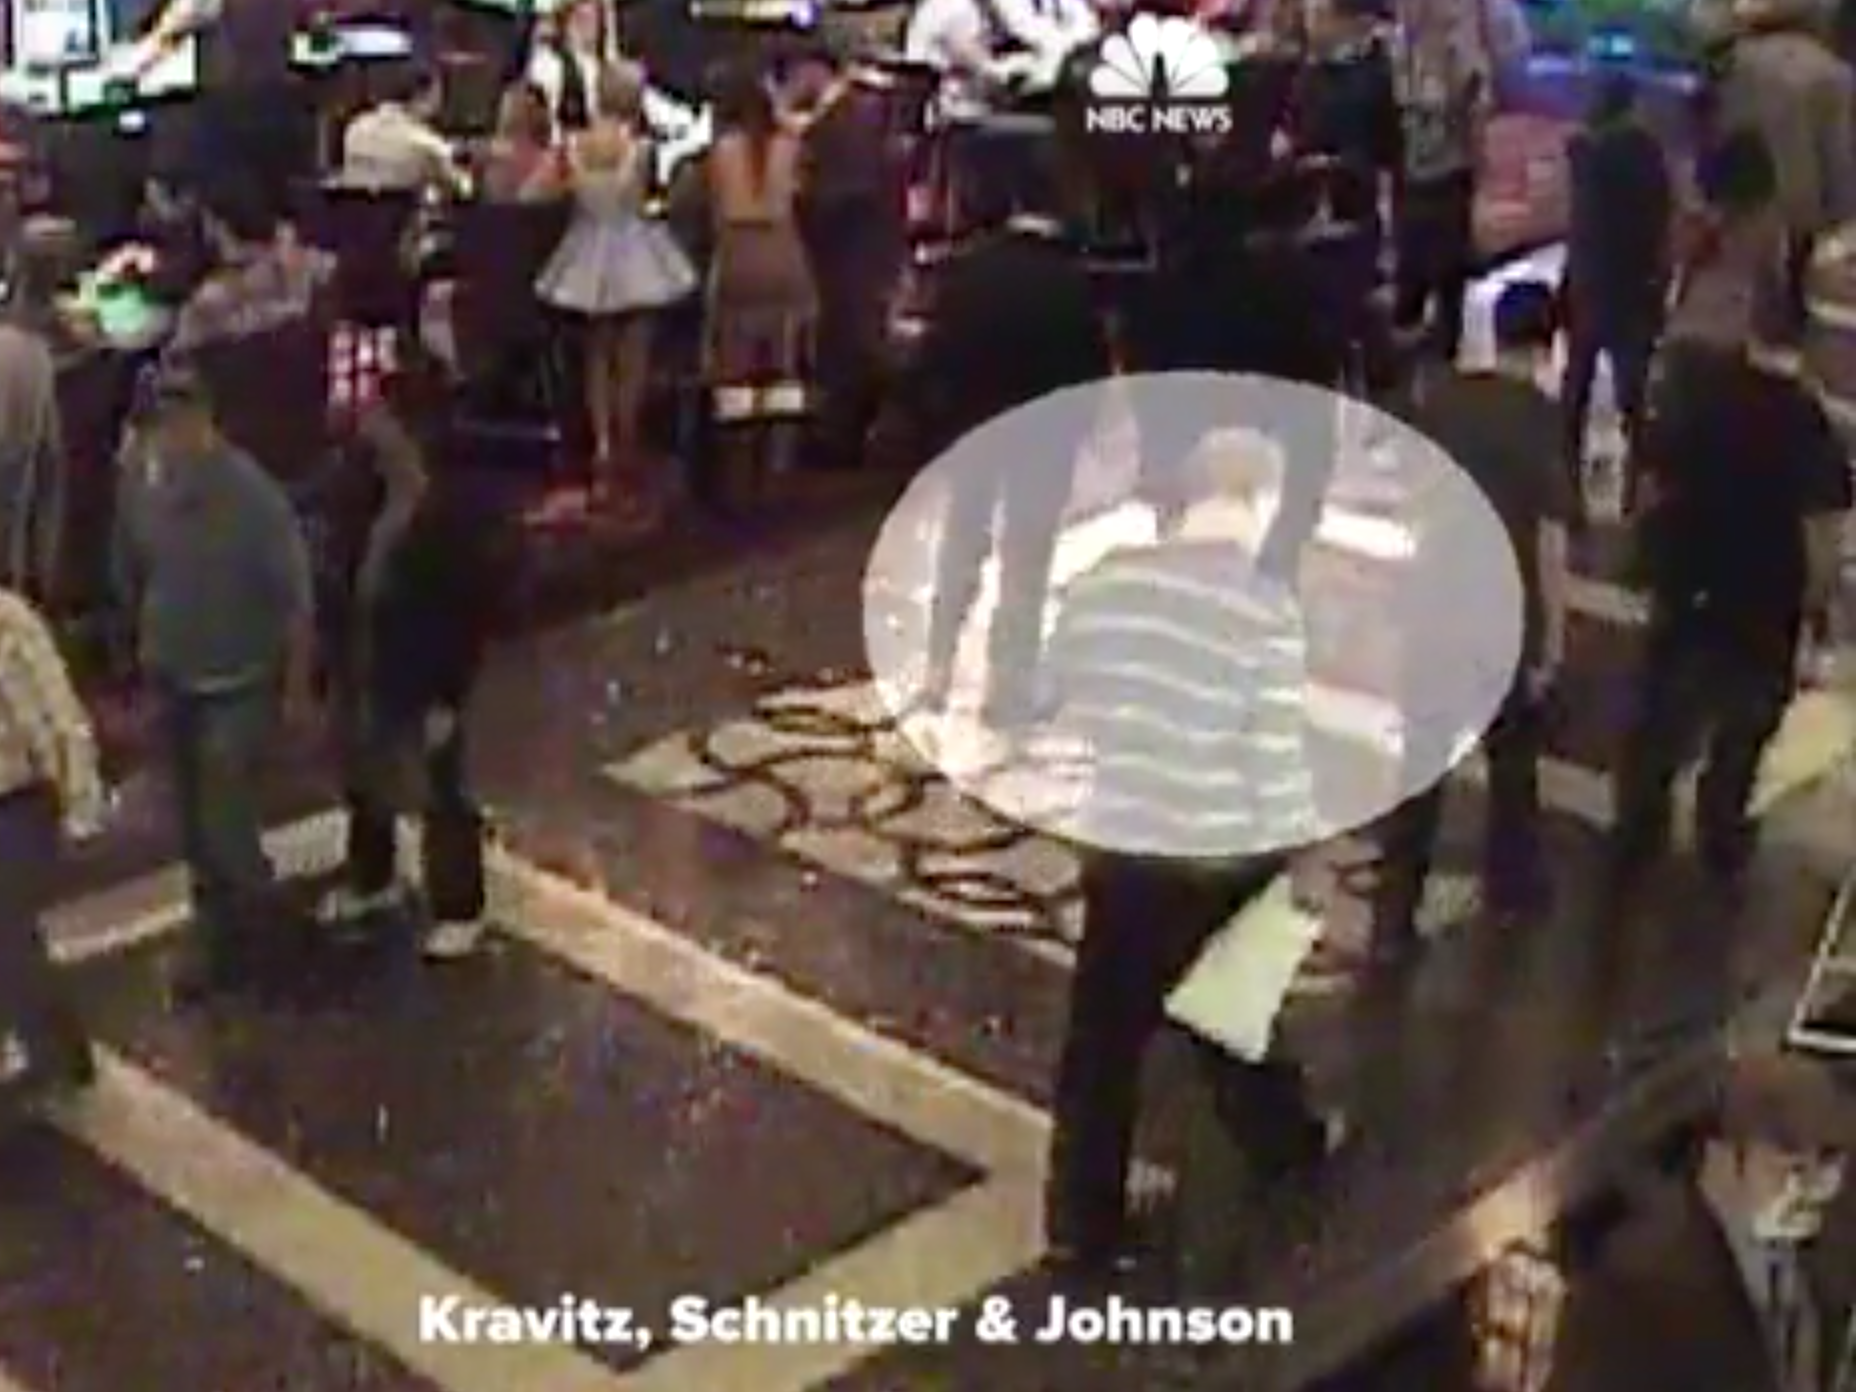 Las Vegas shooter Stephen Paddock appears on security footage at the Cosmopolitan Hotel in 2011